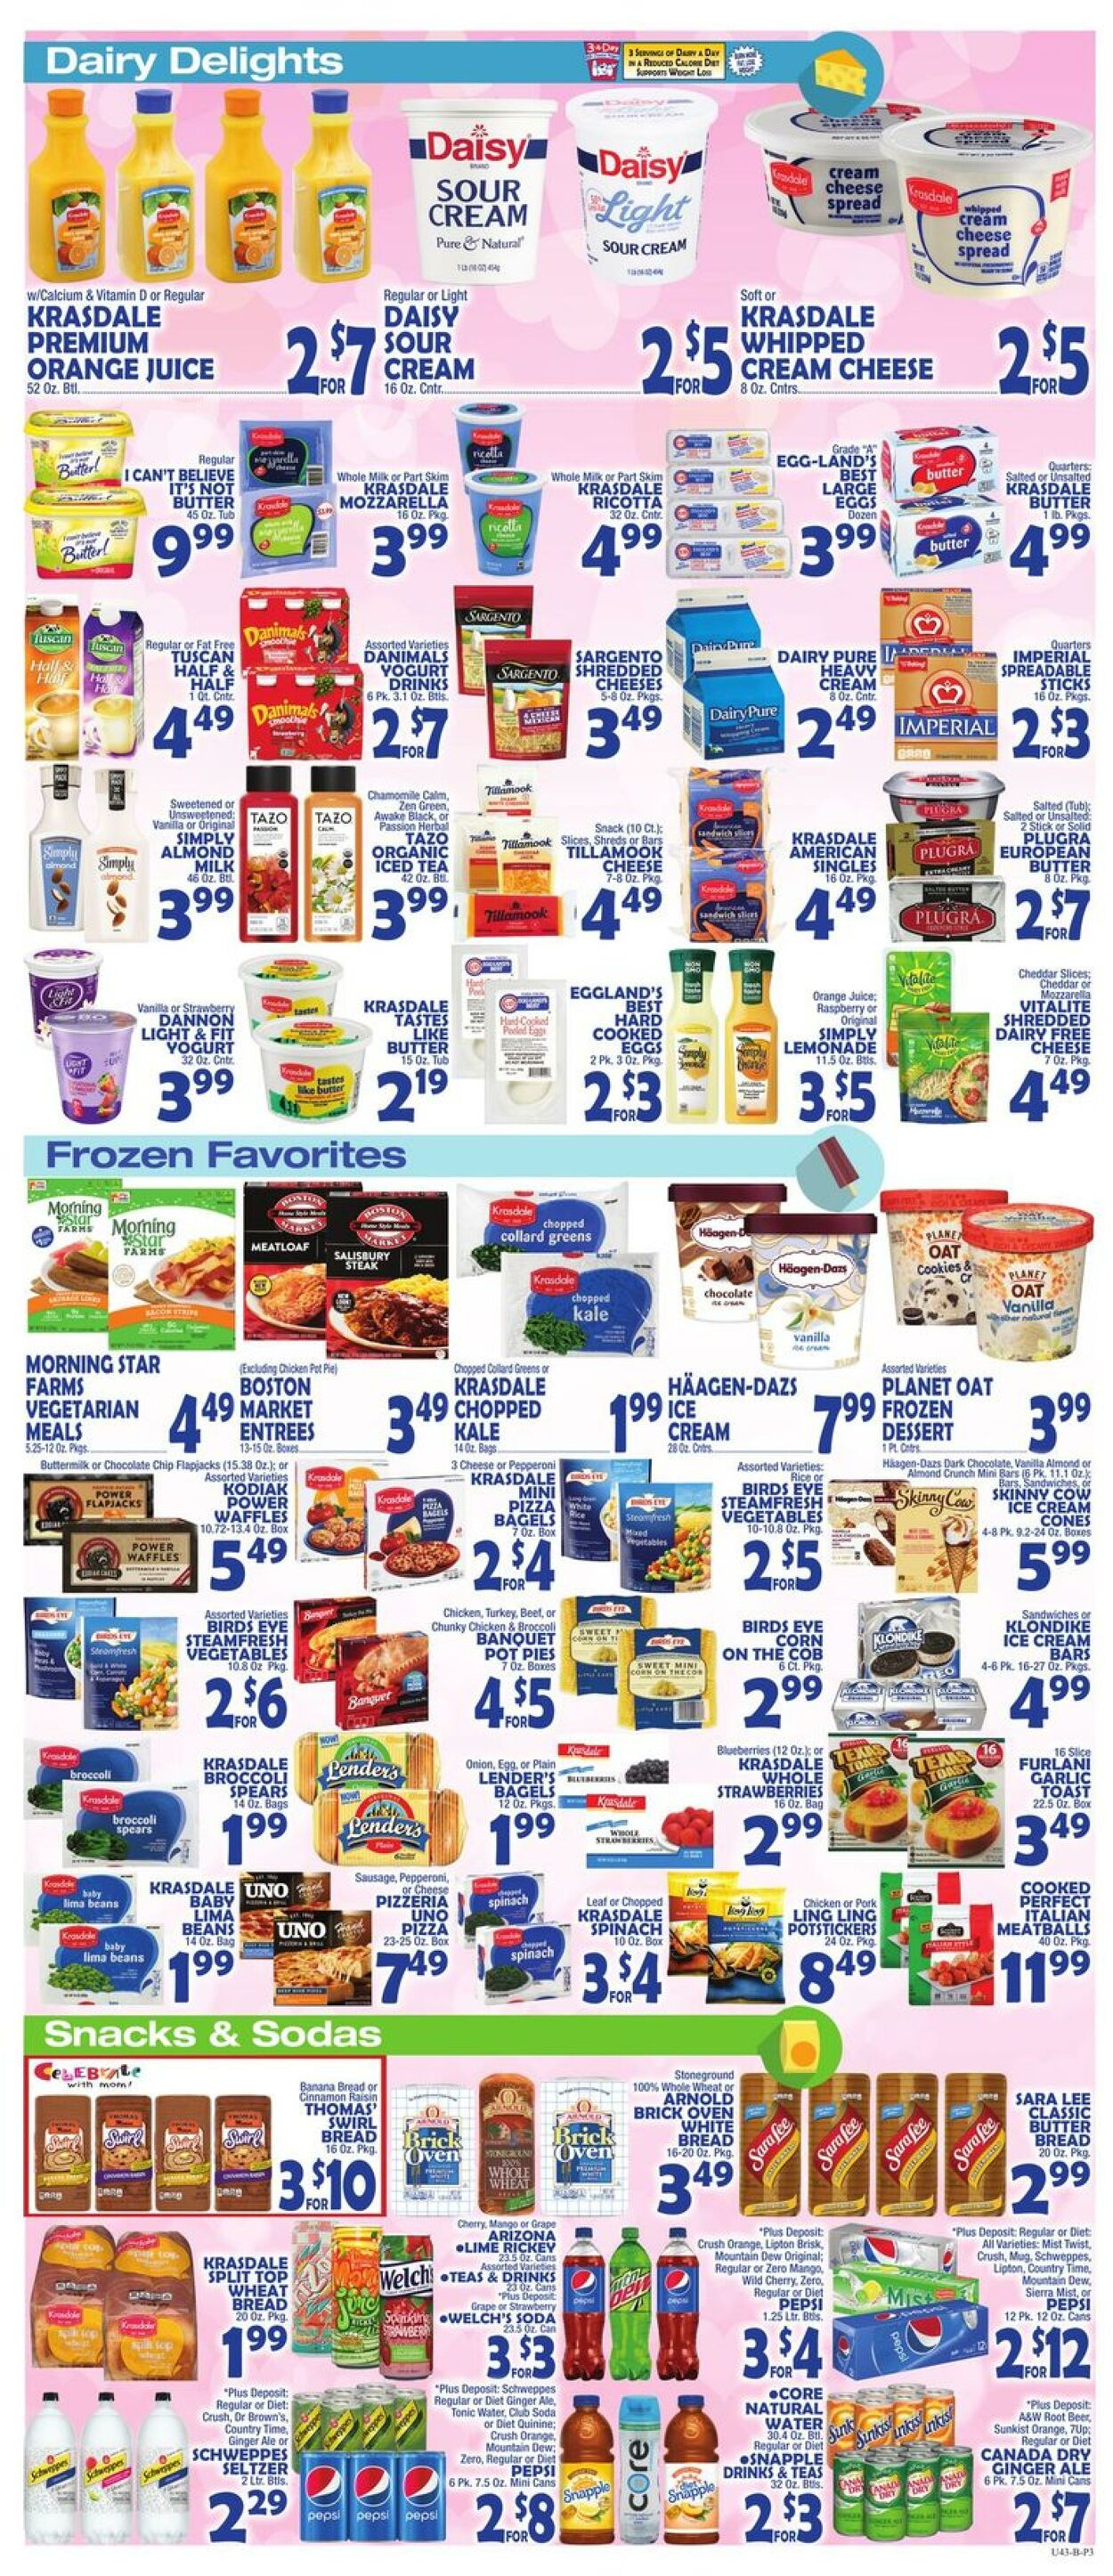 Weekly ad Bravo Supermarkets 05/06/2022 - 05/12/2022